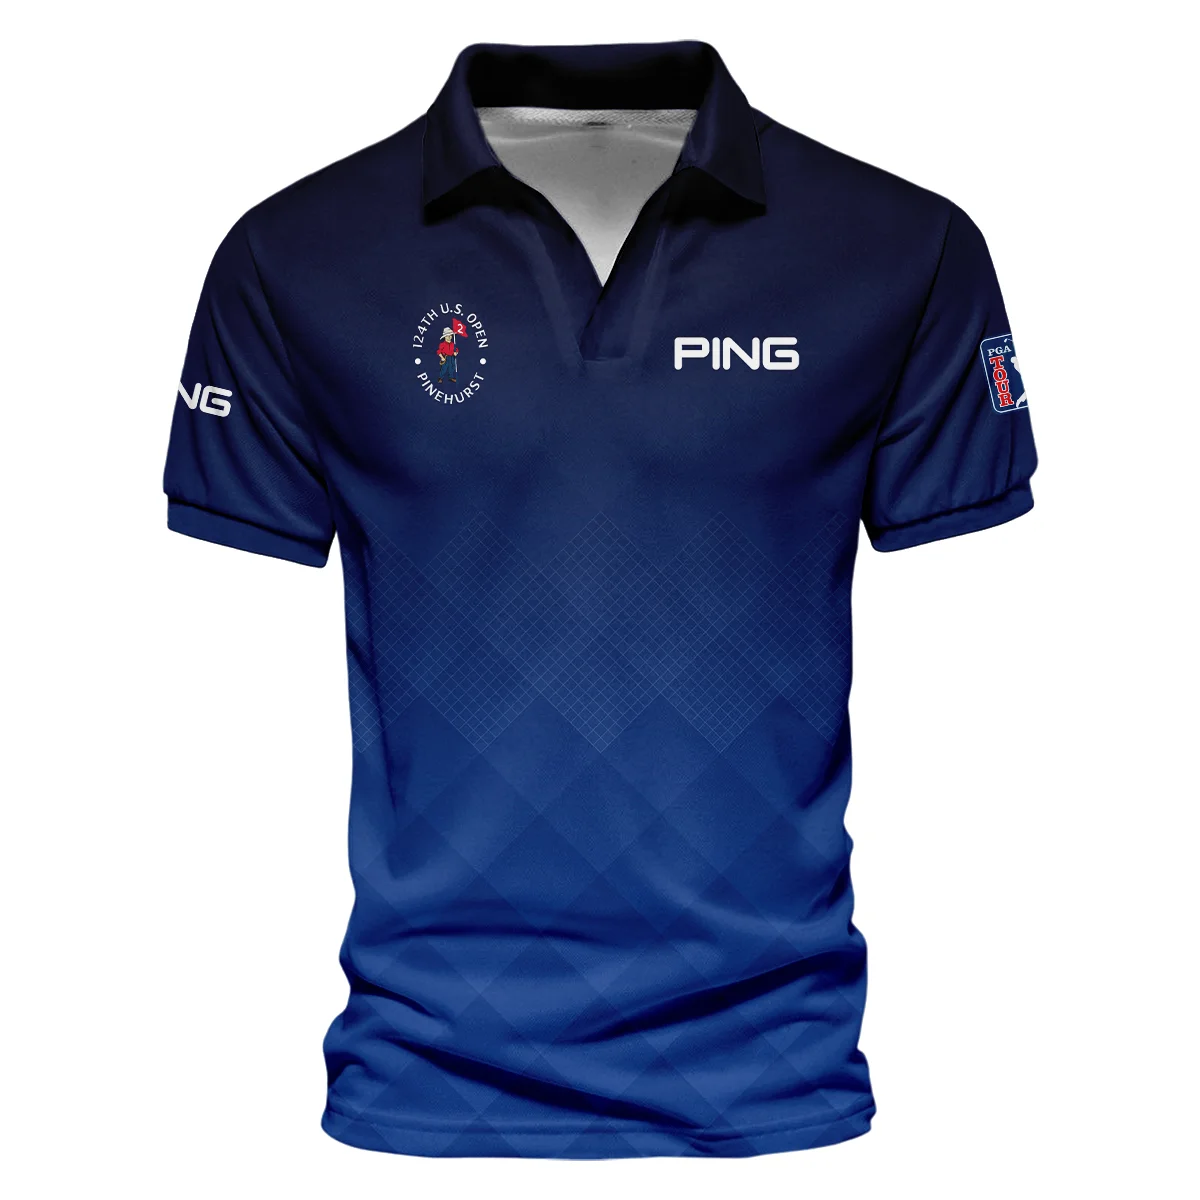 124th U.S. Open Pinehurst Ping Dark Blue Gradient Stripes Pattern Vneck Polo Shirt Style Classic Polo Shirt For Men